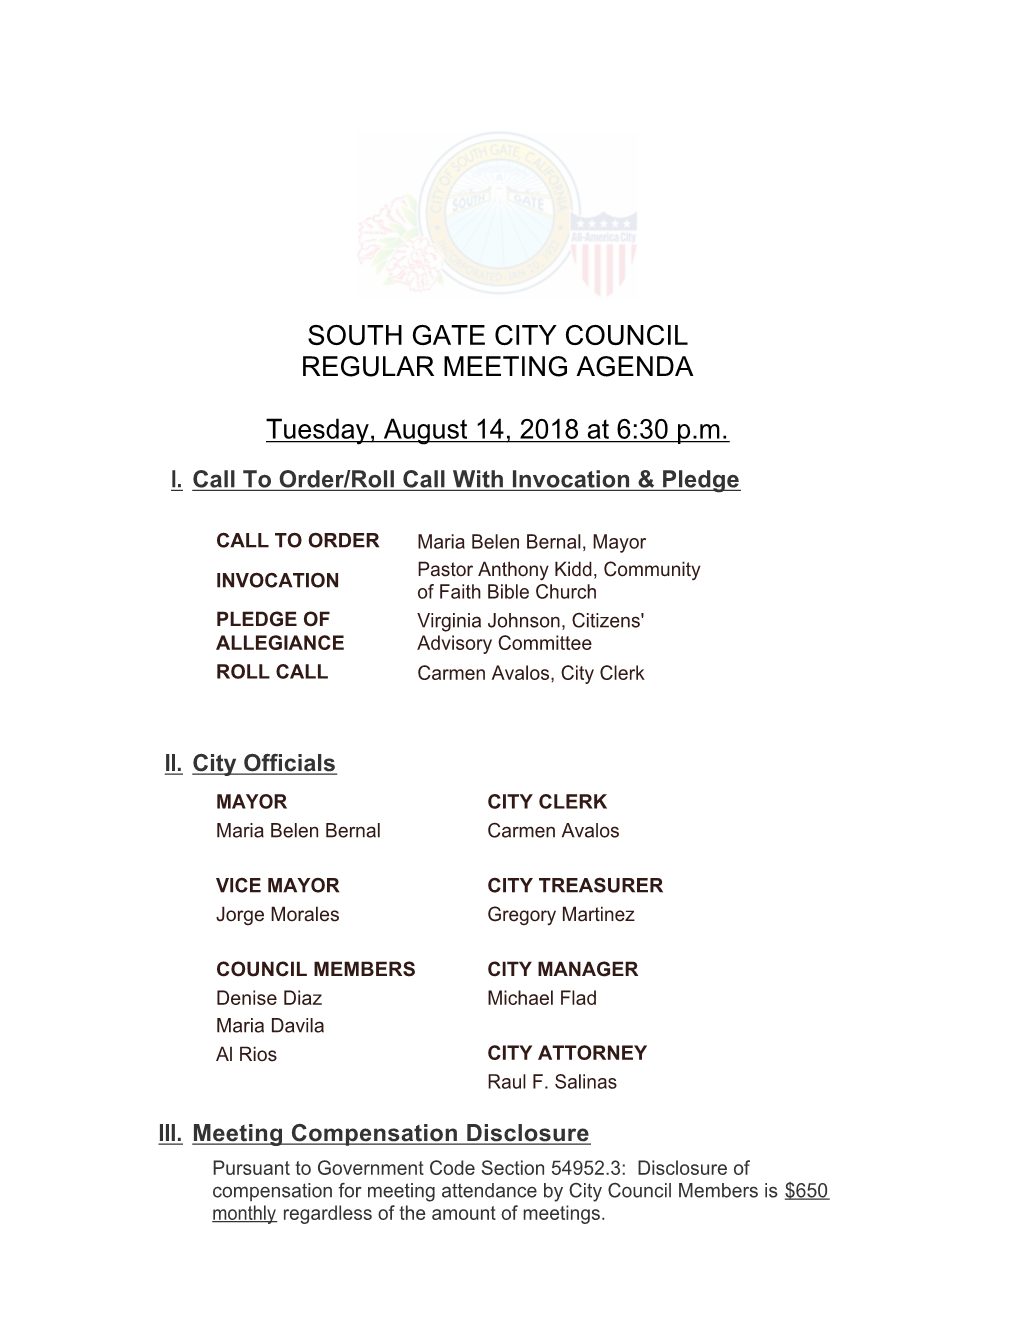 South Gate City Council Regular Meeting Agenda